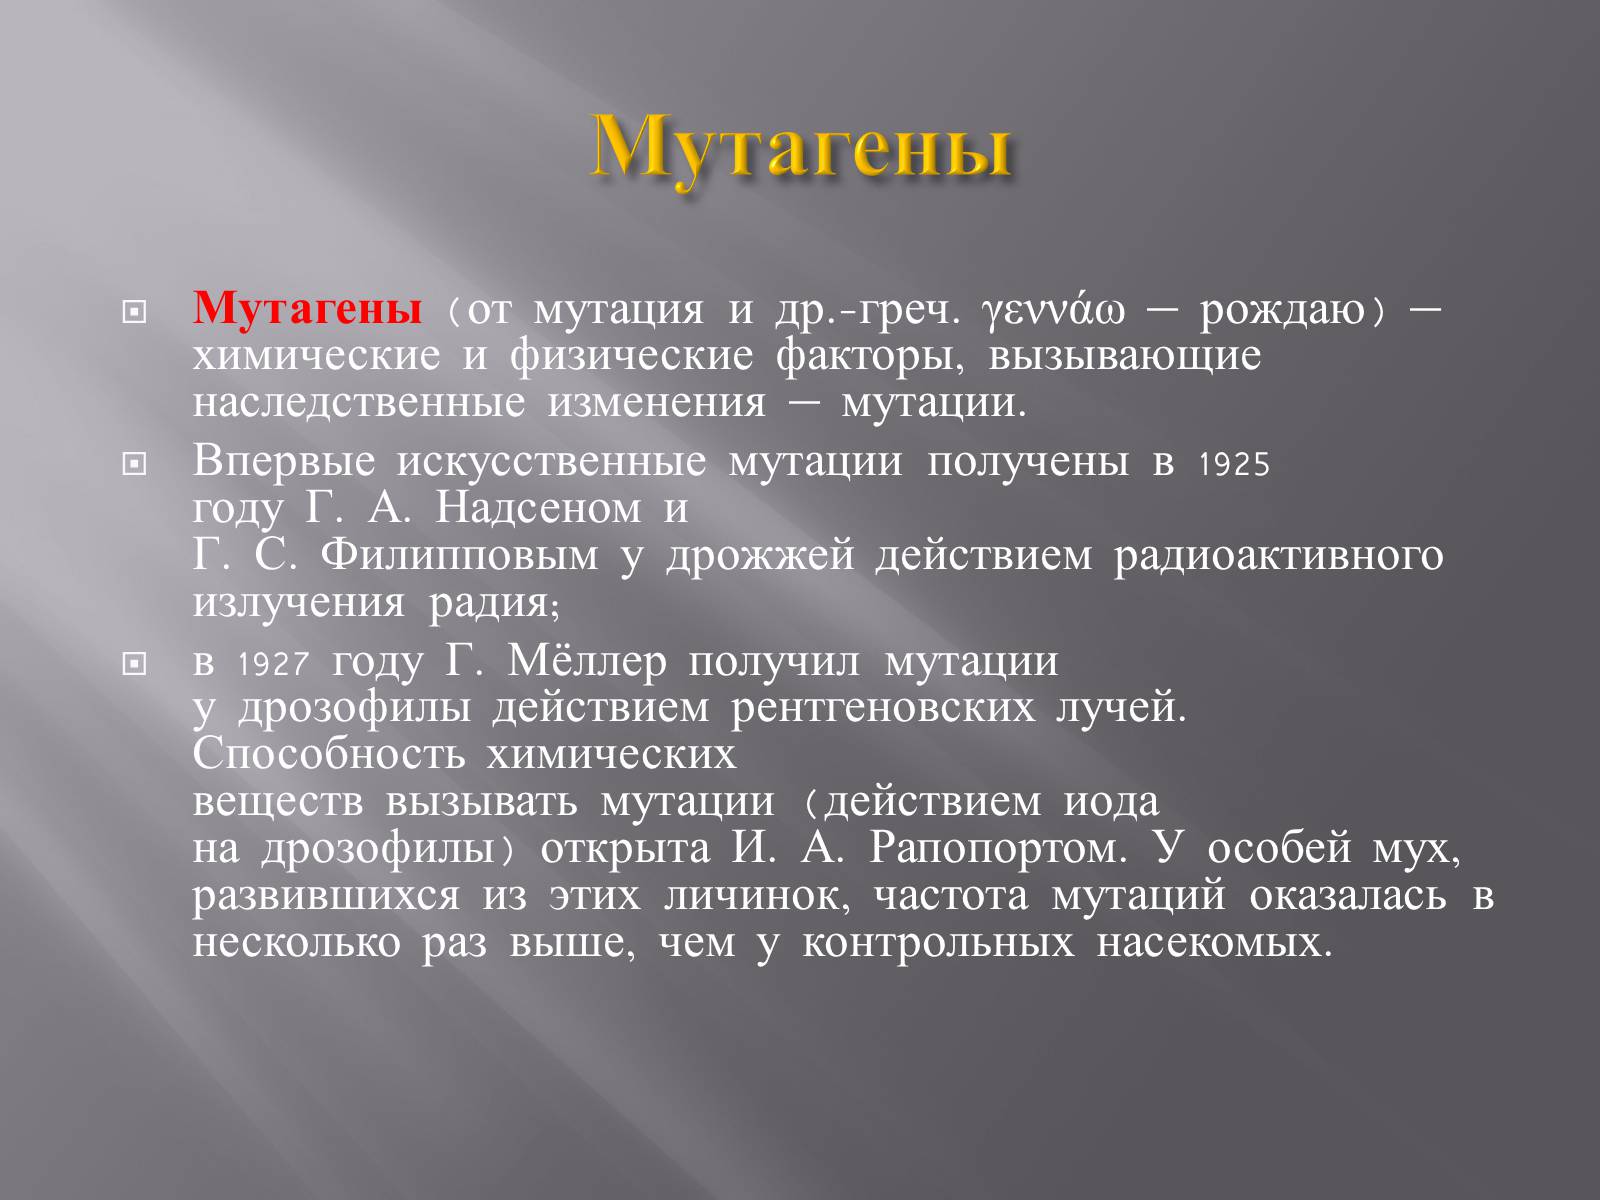 Презентація на тему «Мутации, мутогены, виды мутаций, причины мутаций, значение мутаций» - Слайд #22